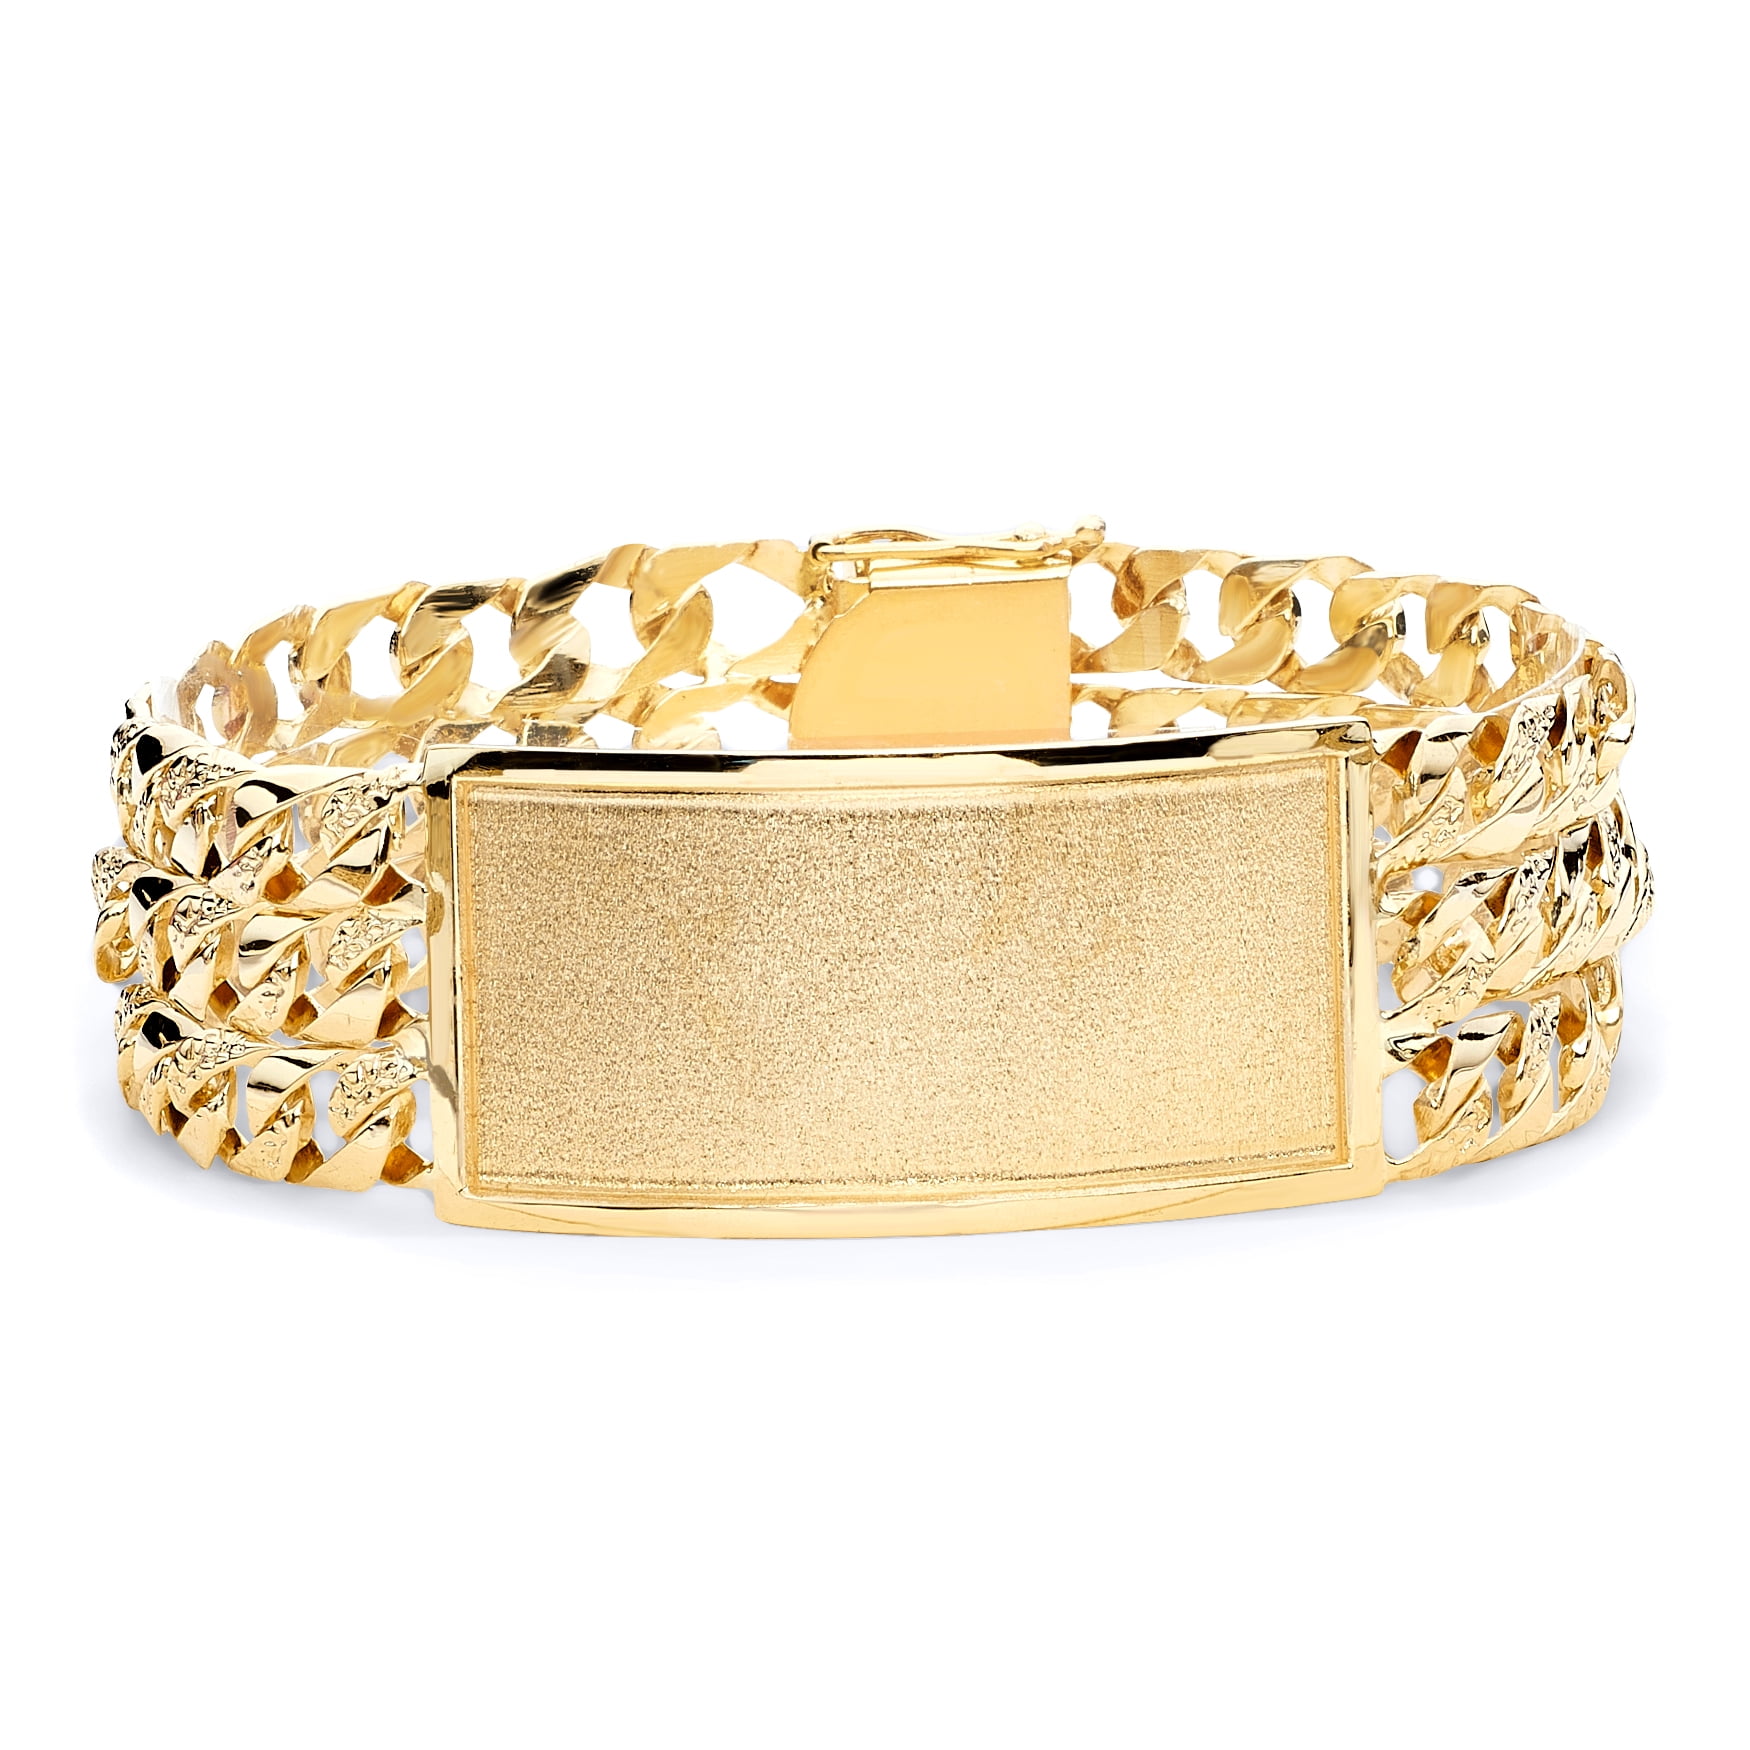 ZIVOM Stainless Steel Rubber Gold Black ID Wrist Band Bracelet For Men